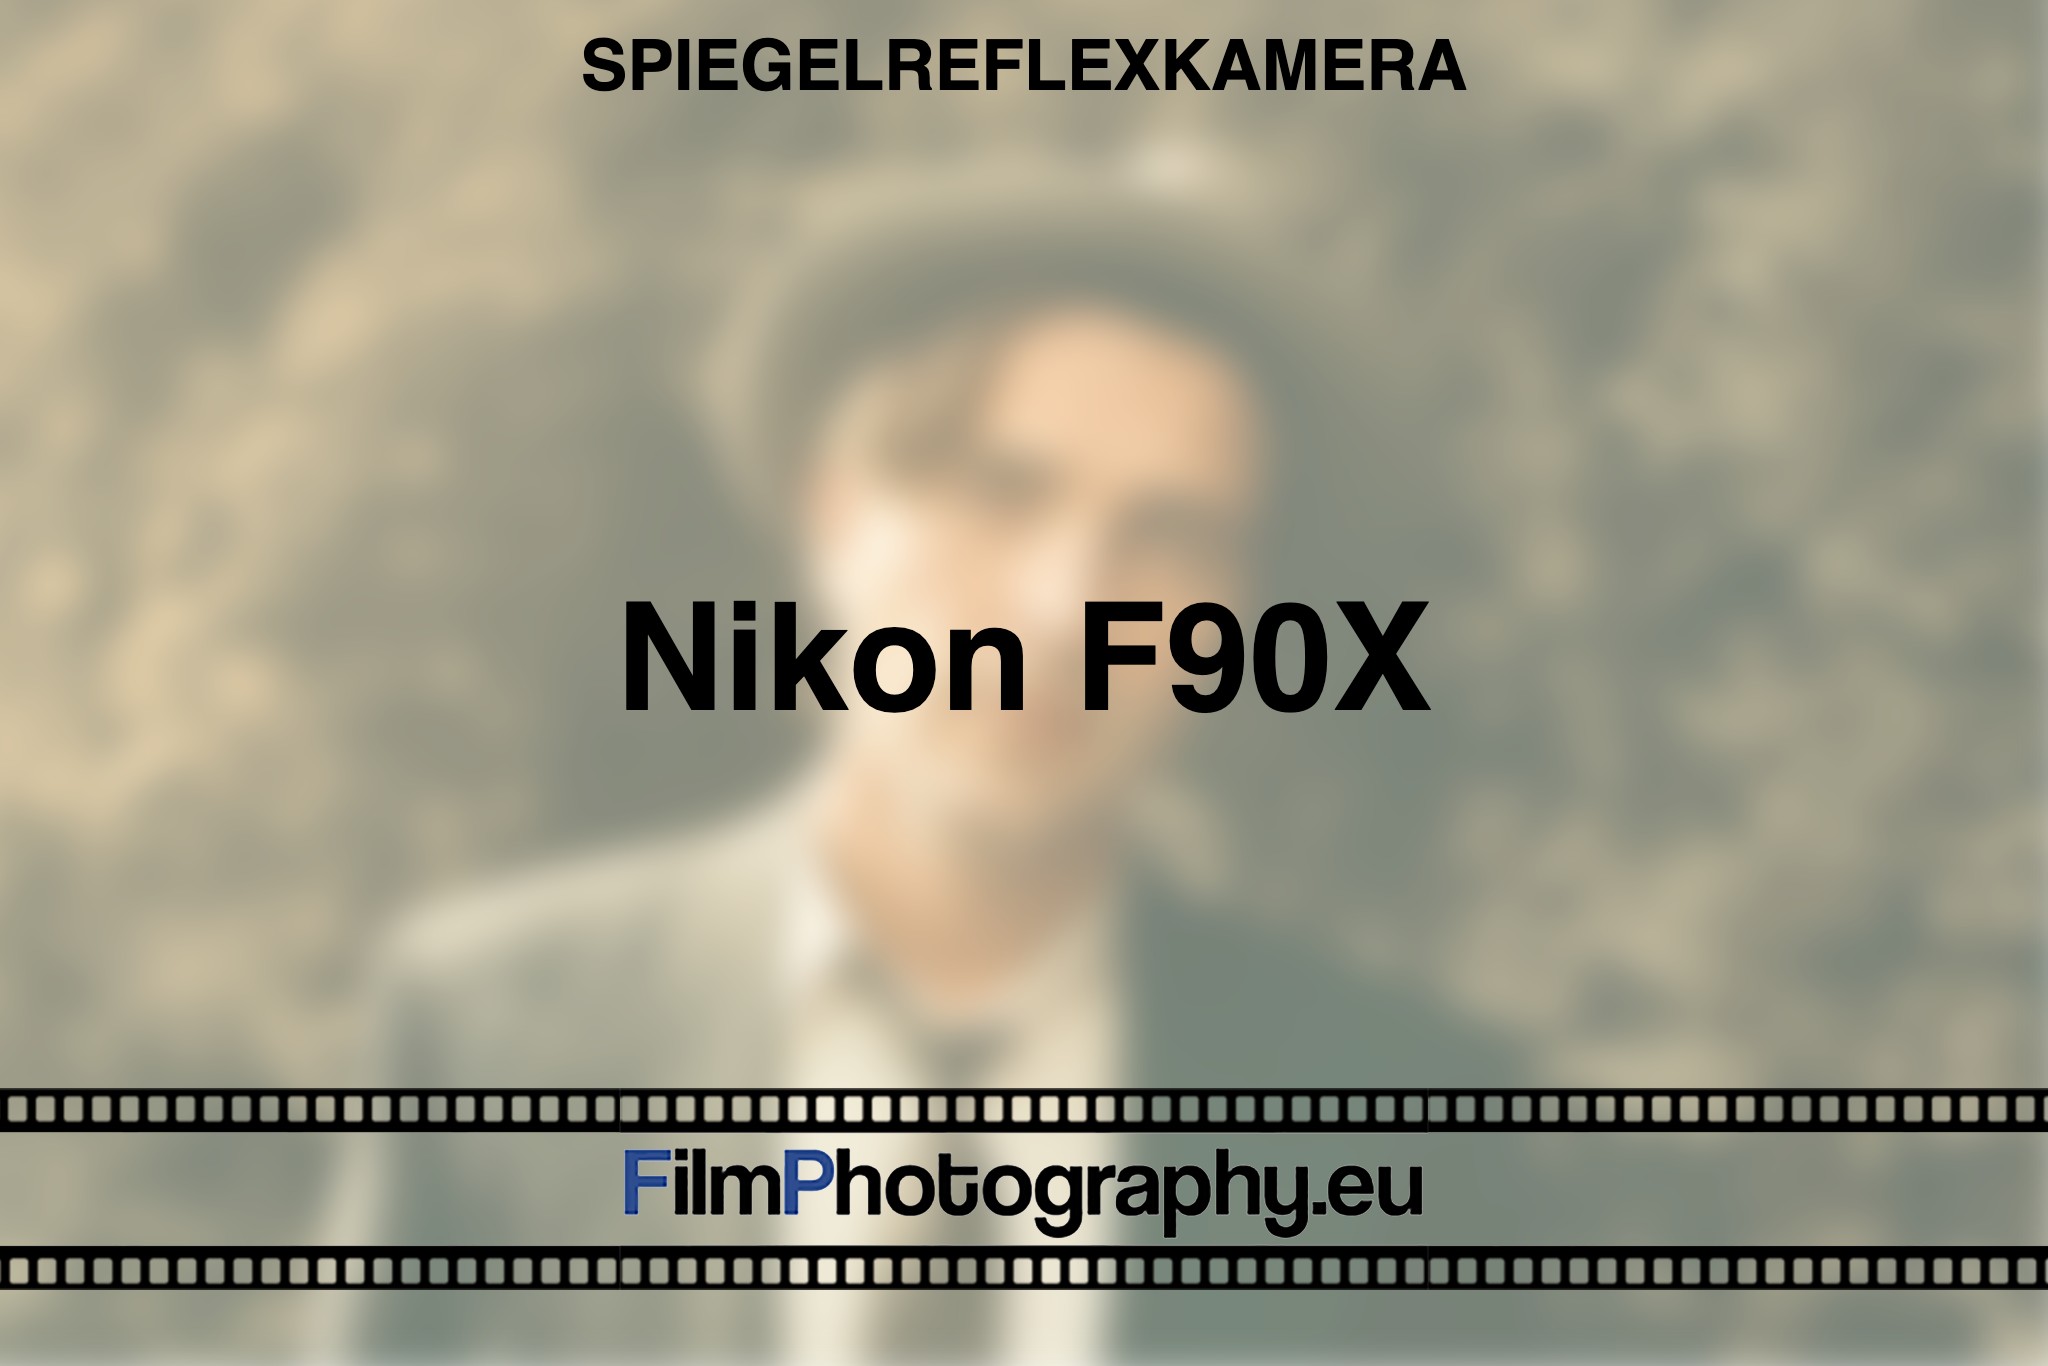 nikon-f90x-spiegelreflexkamera-bnv